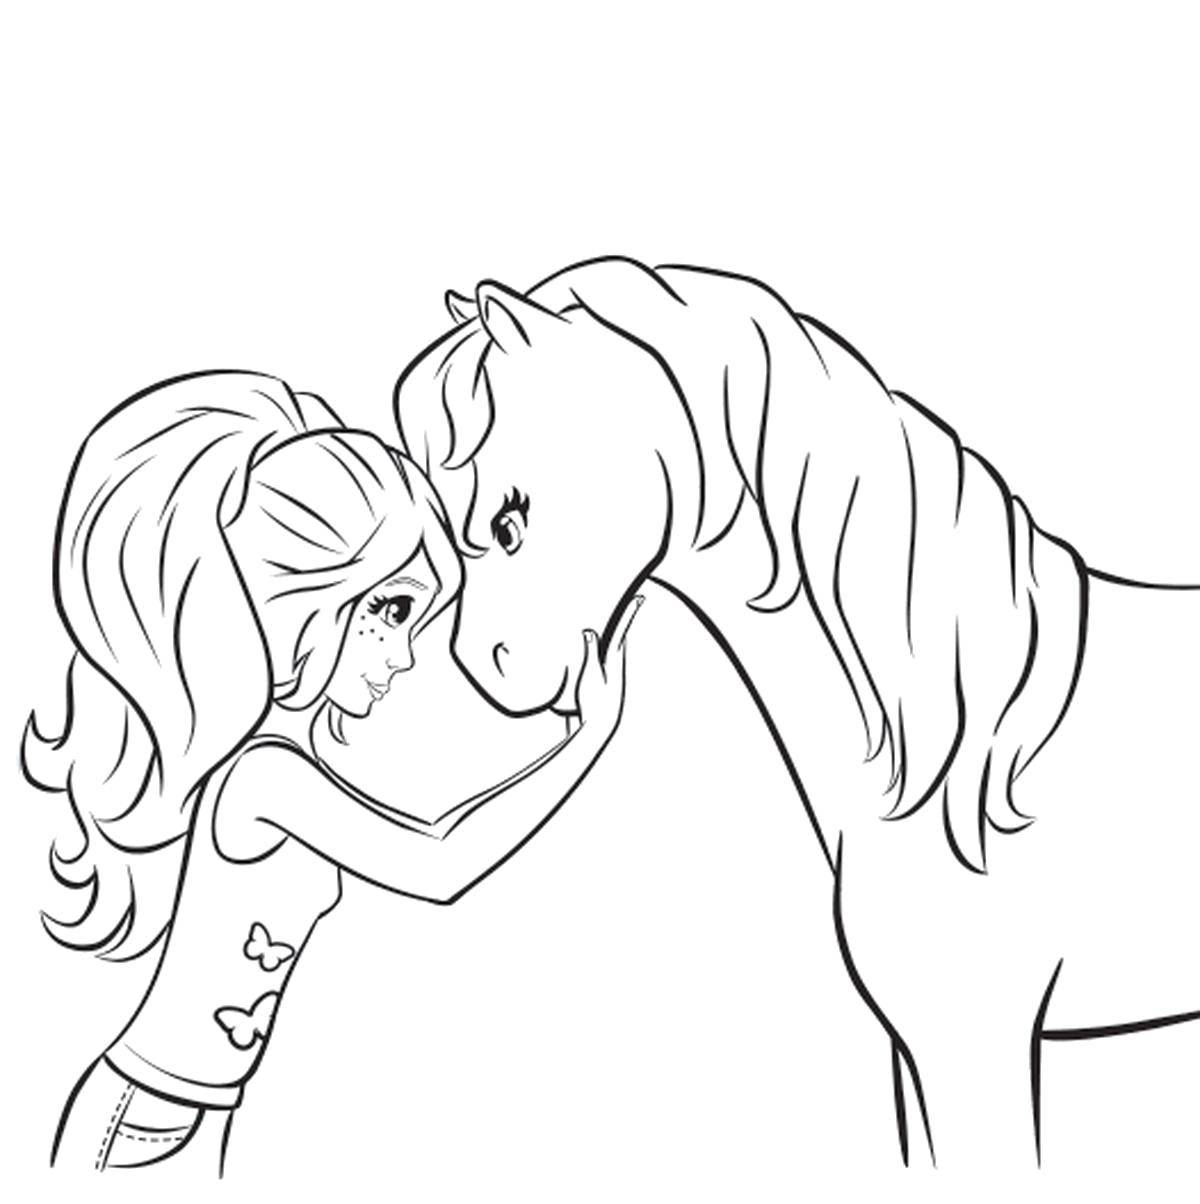 Название: Раскраска Девочка с лошадкой. Категория: Животные. Теги: Животные, лошадь.